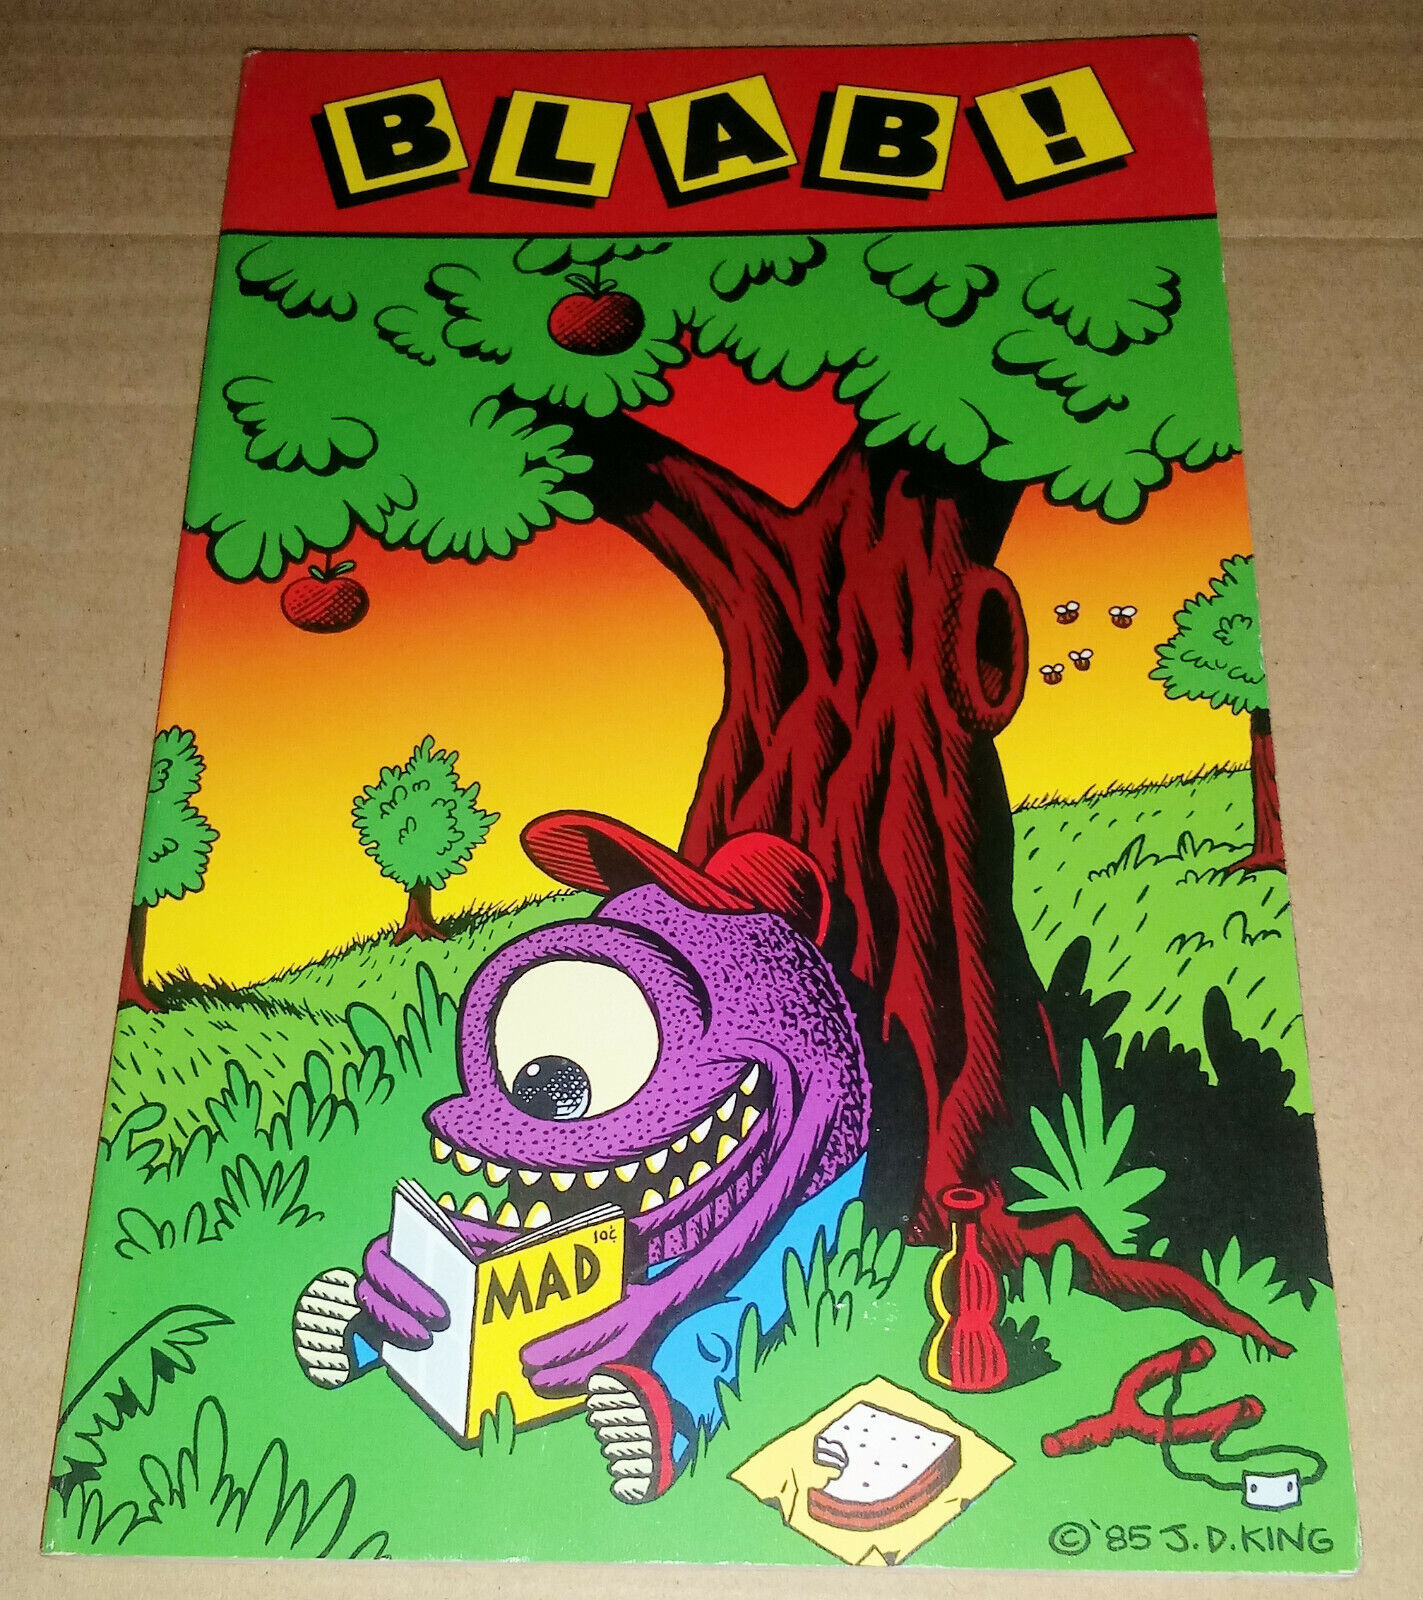 BLAB #1 - Essays on the influence of EC comics, VG-Fine ~ 1993 reprint